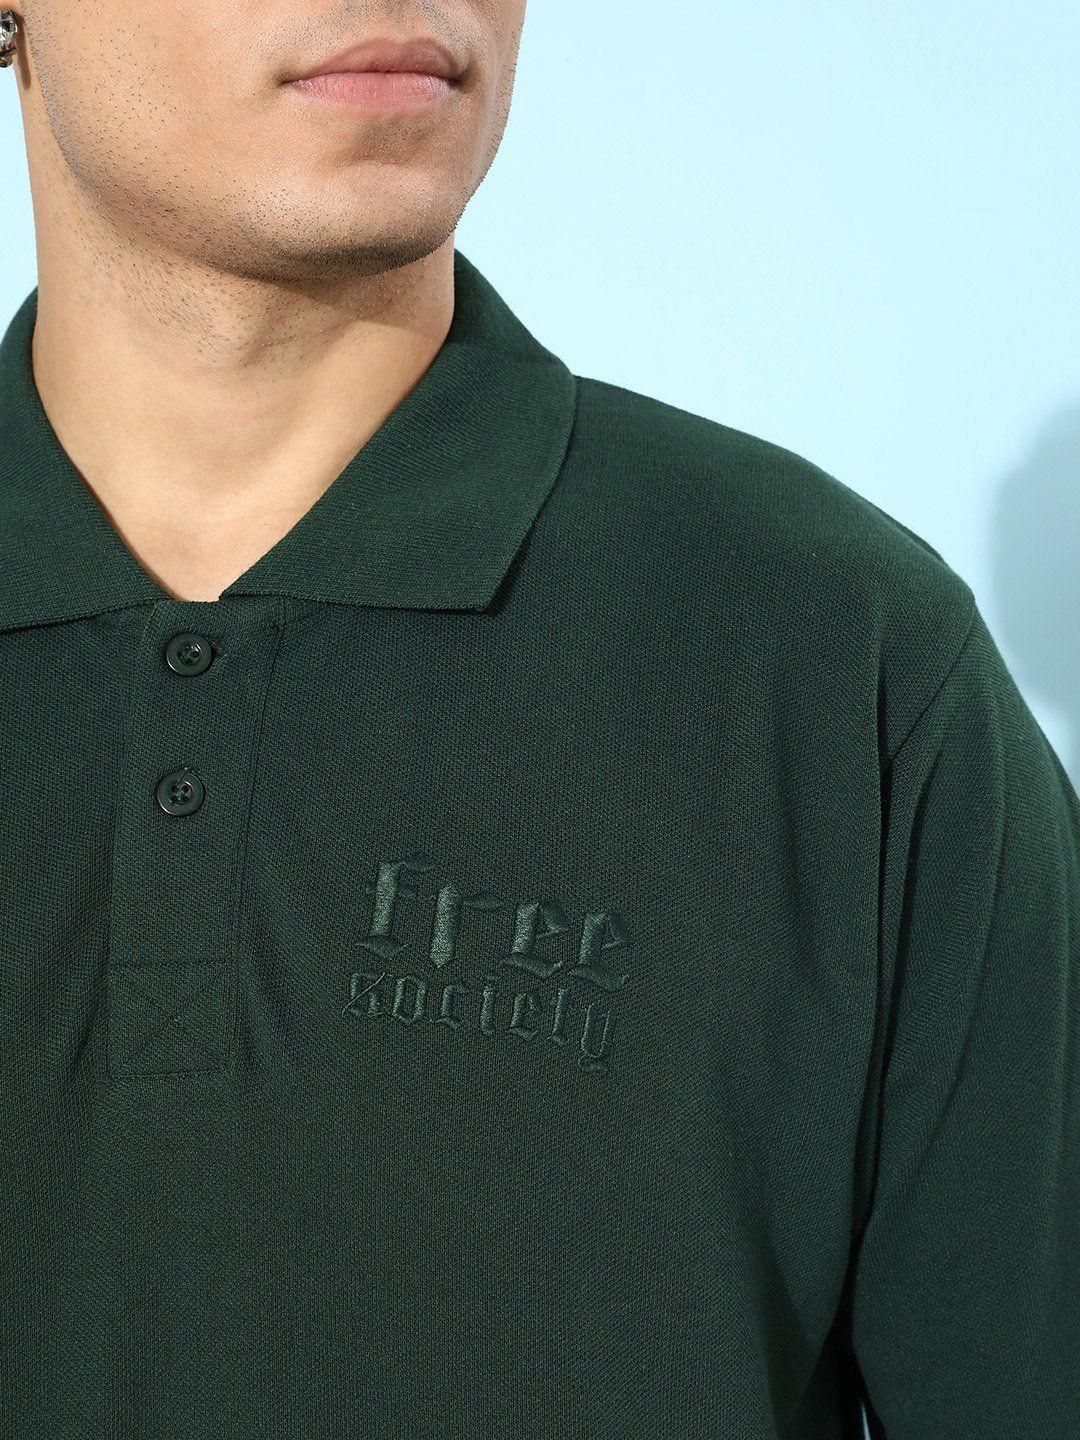 Free Society Men's Cotton Typography Print Oversized Polo T-Shirt